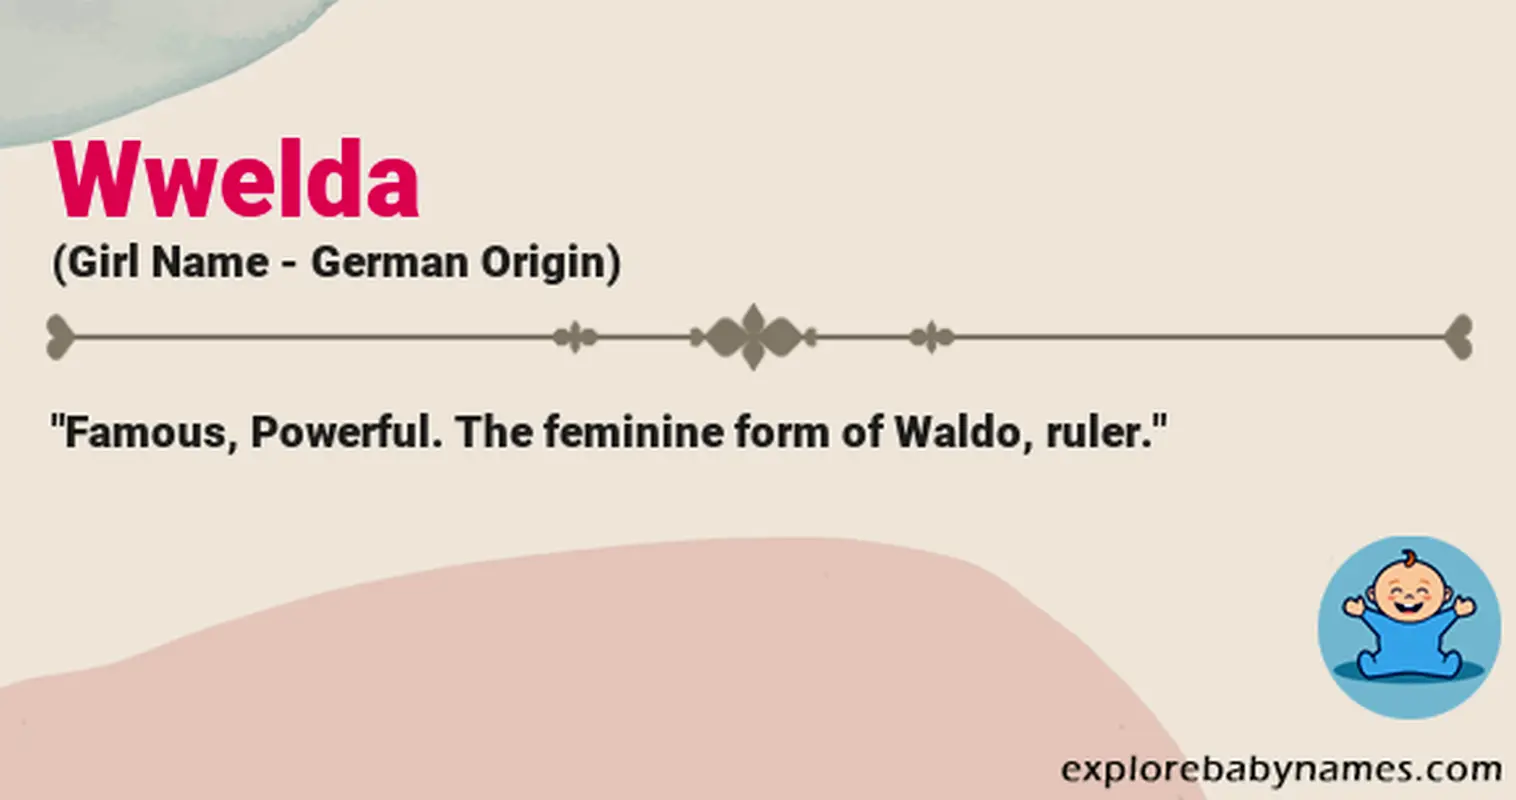 Meaning of Wwelda